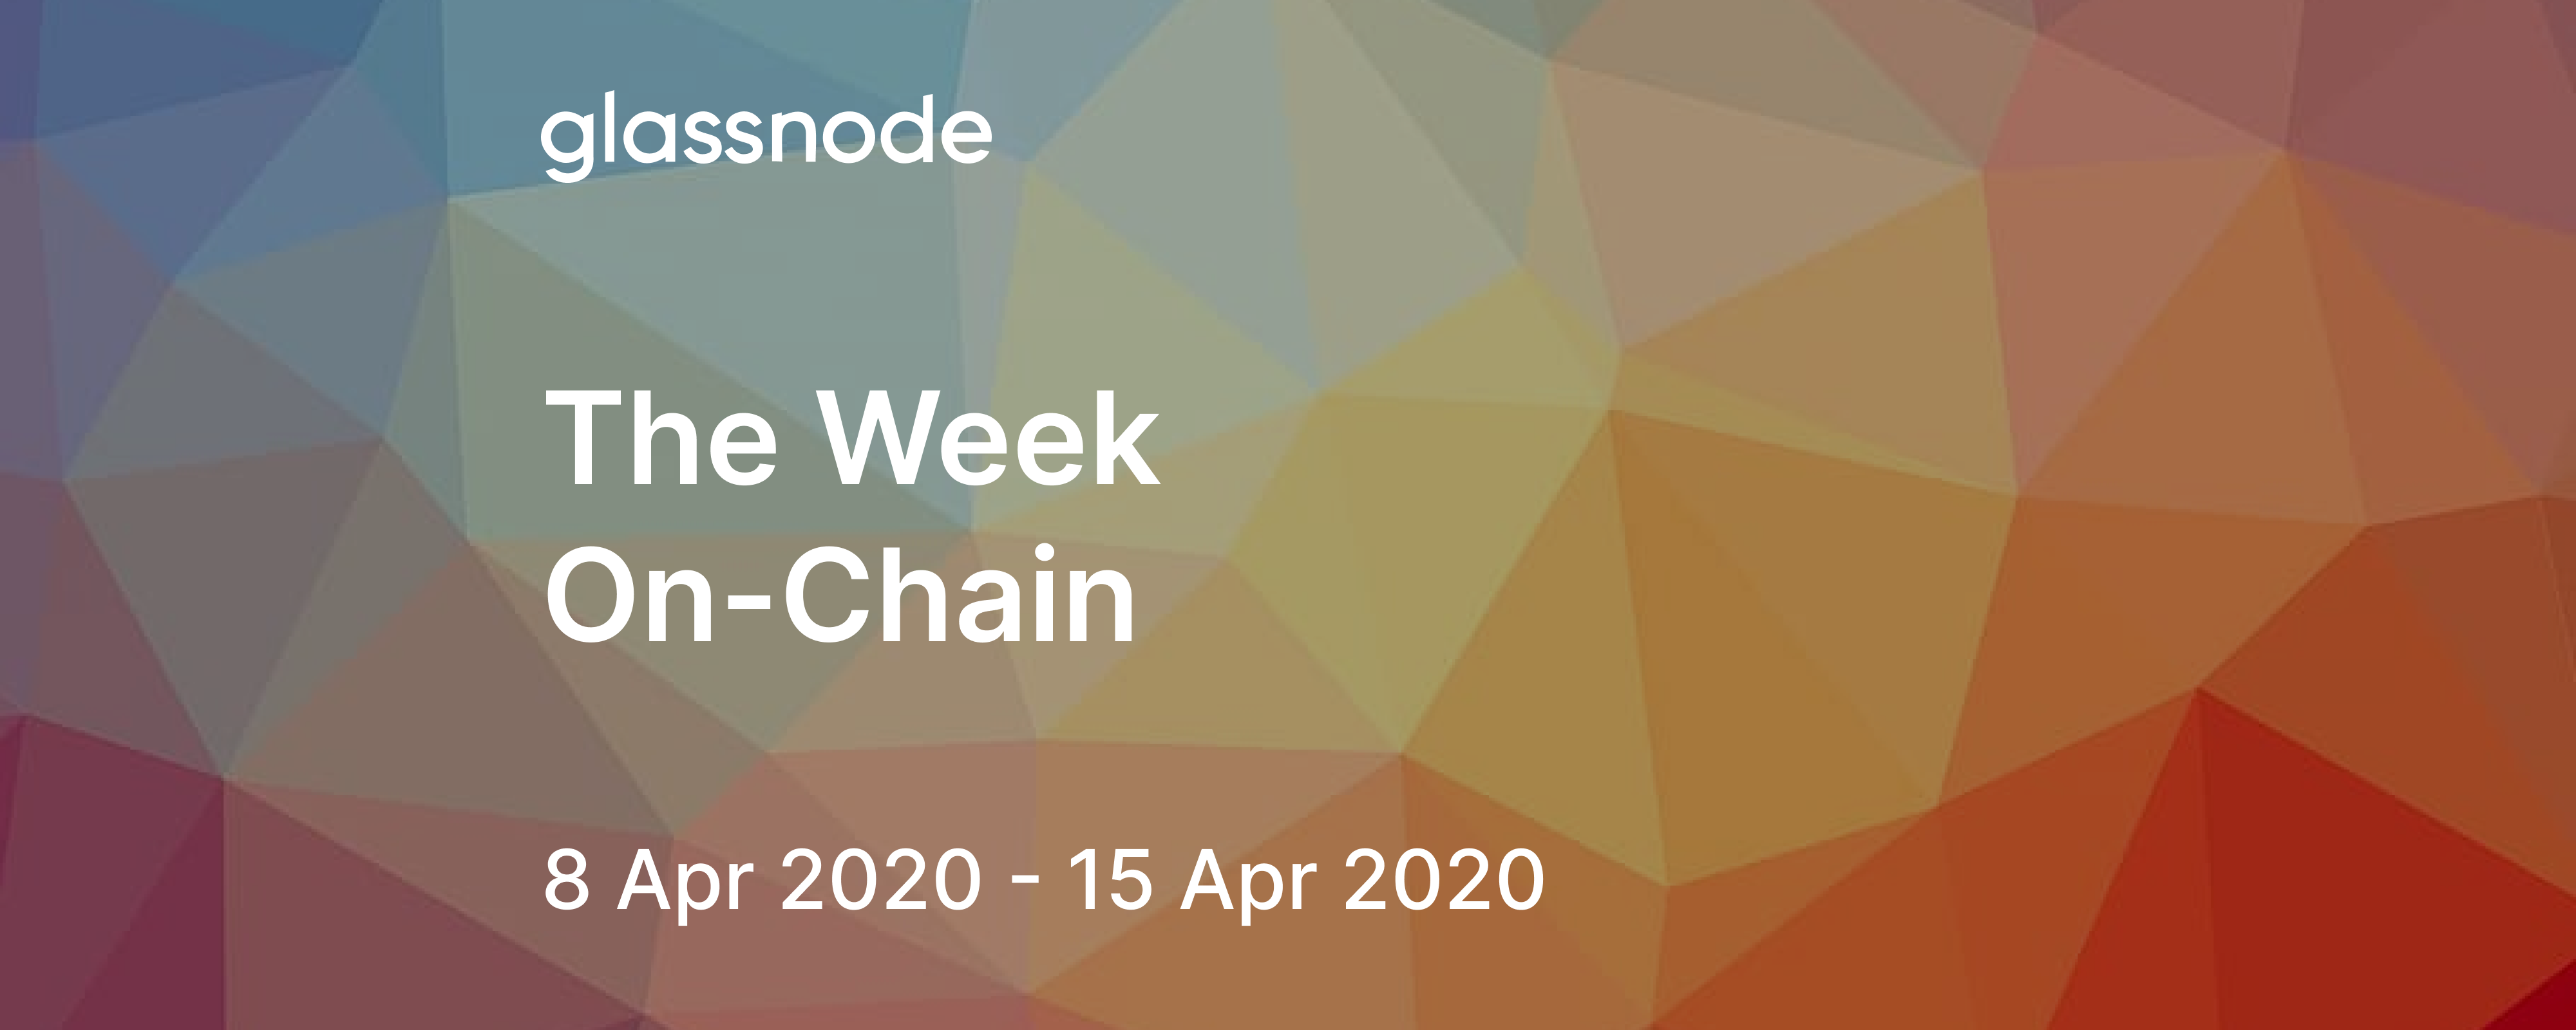 The Week On-Chain (8 Apr 2020 - 15 Apr 2020)